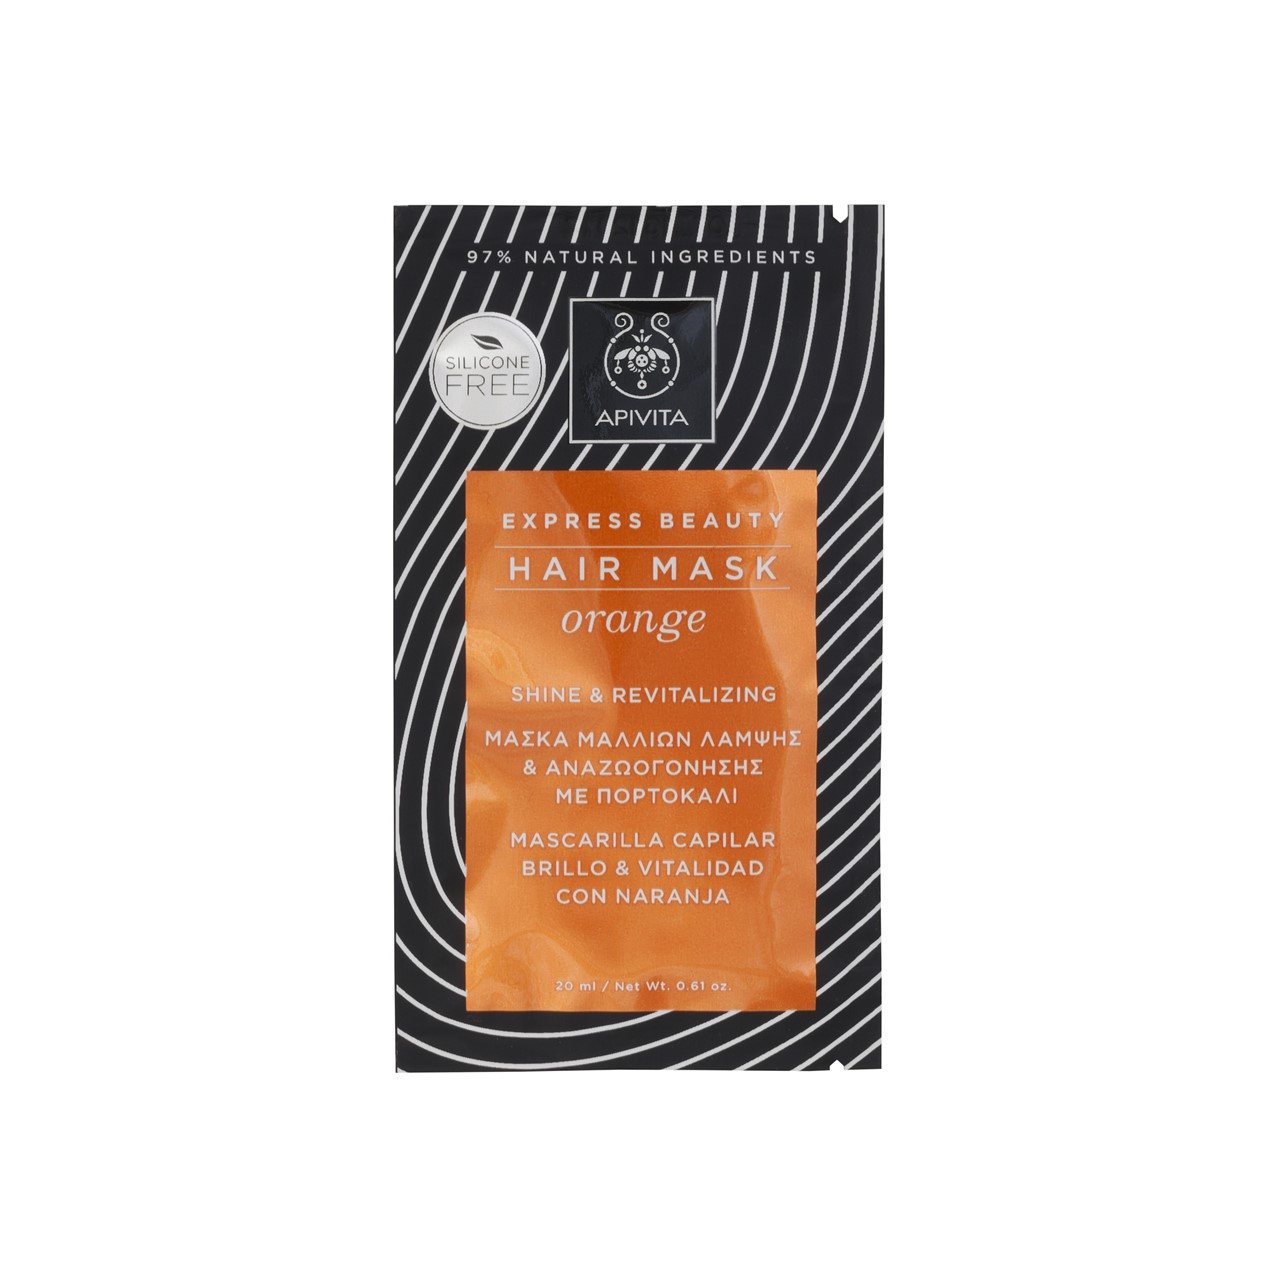 APIVITA Express Beauty Hair Mask Orange 20ml (0.68fl oz)